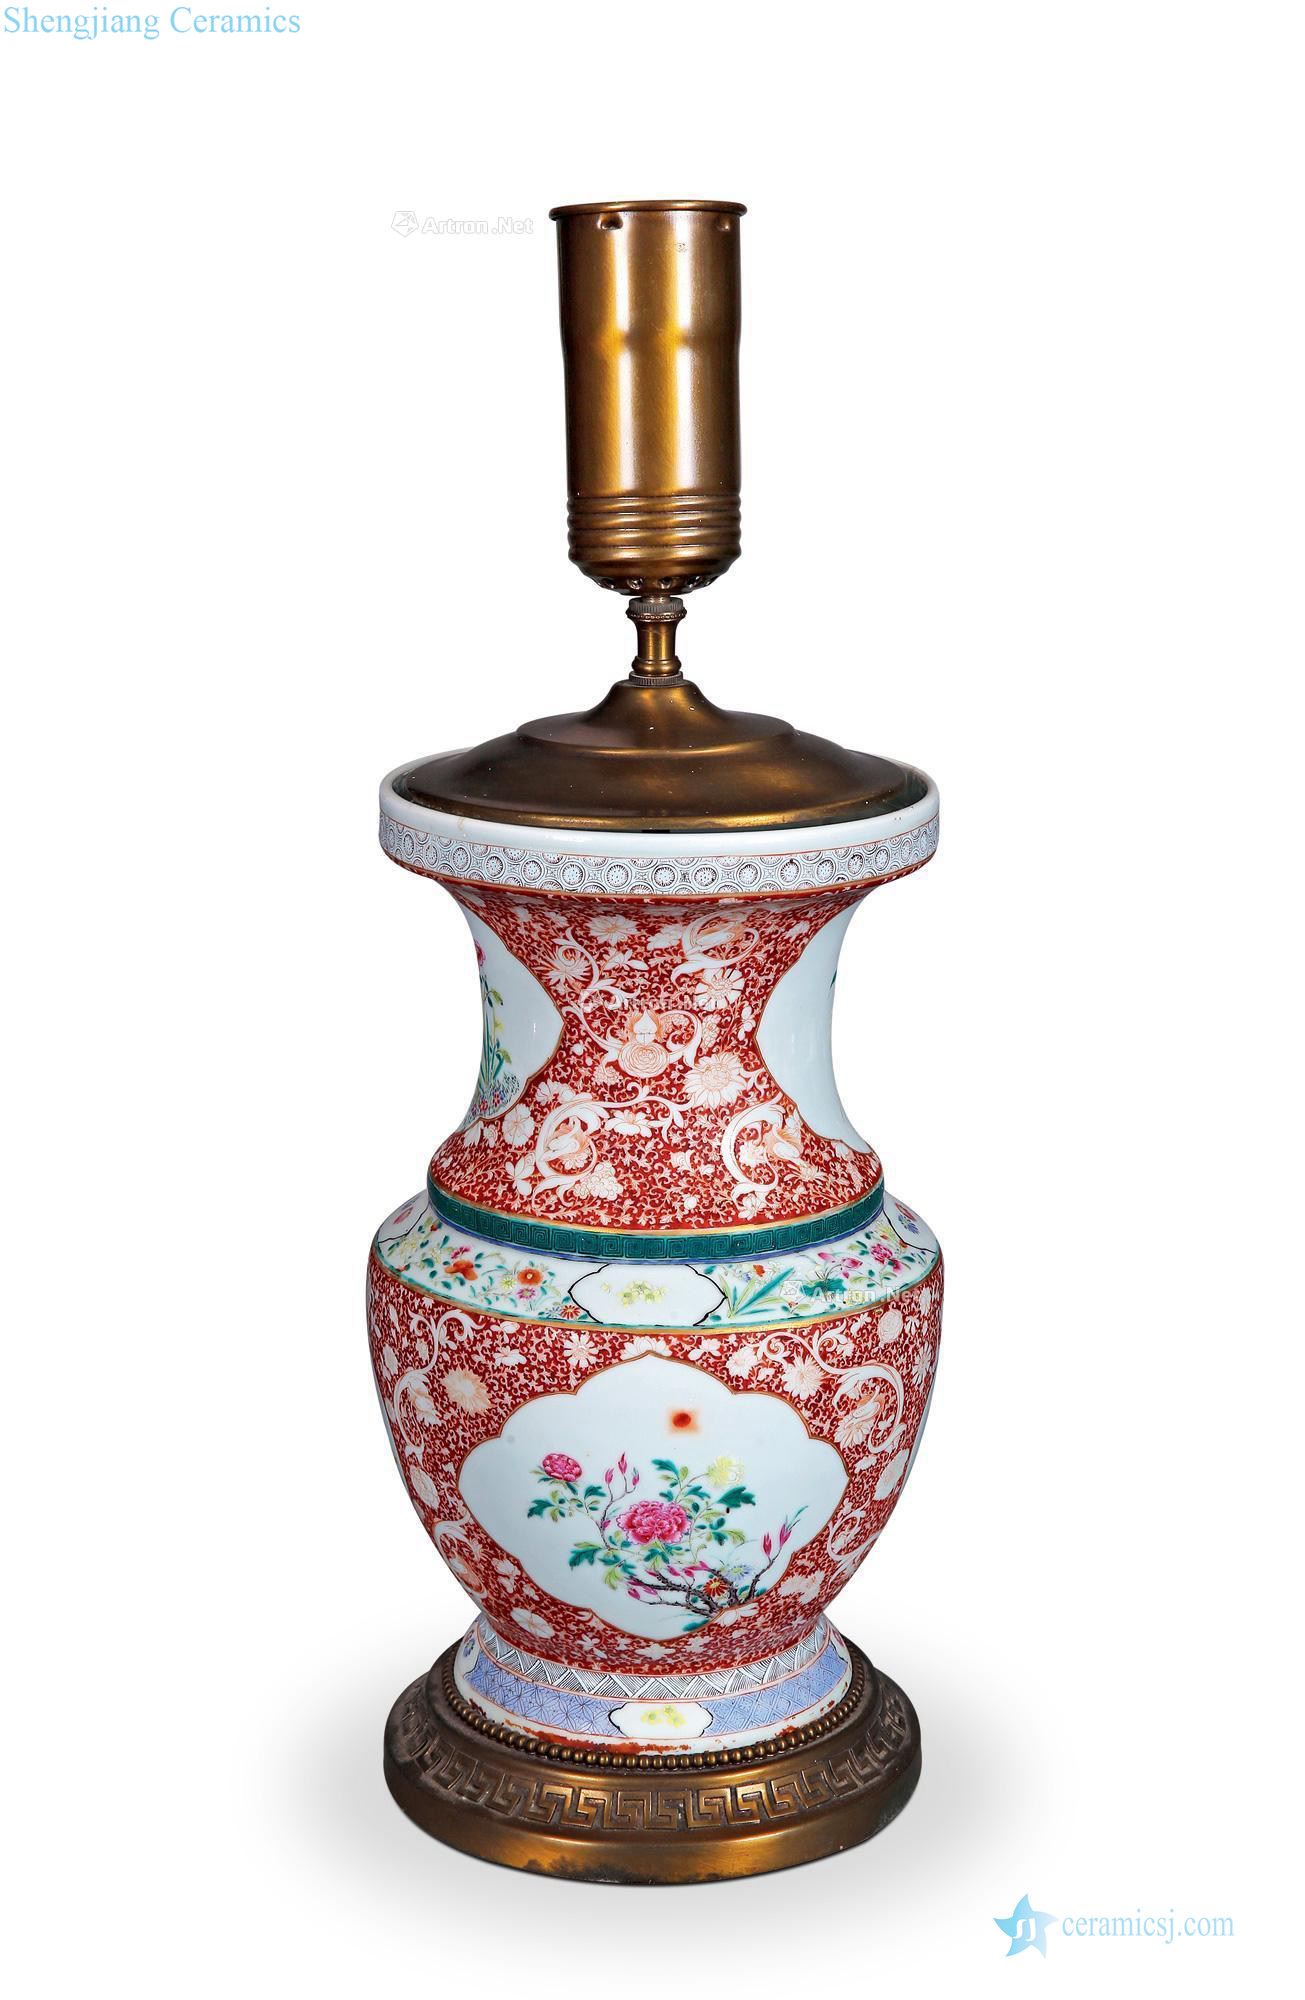 Yong zheng famille rose dish medallion floral design With lamp holder